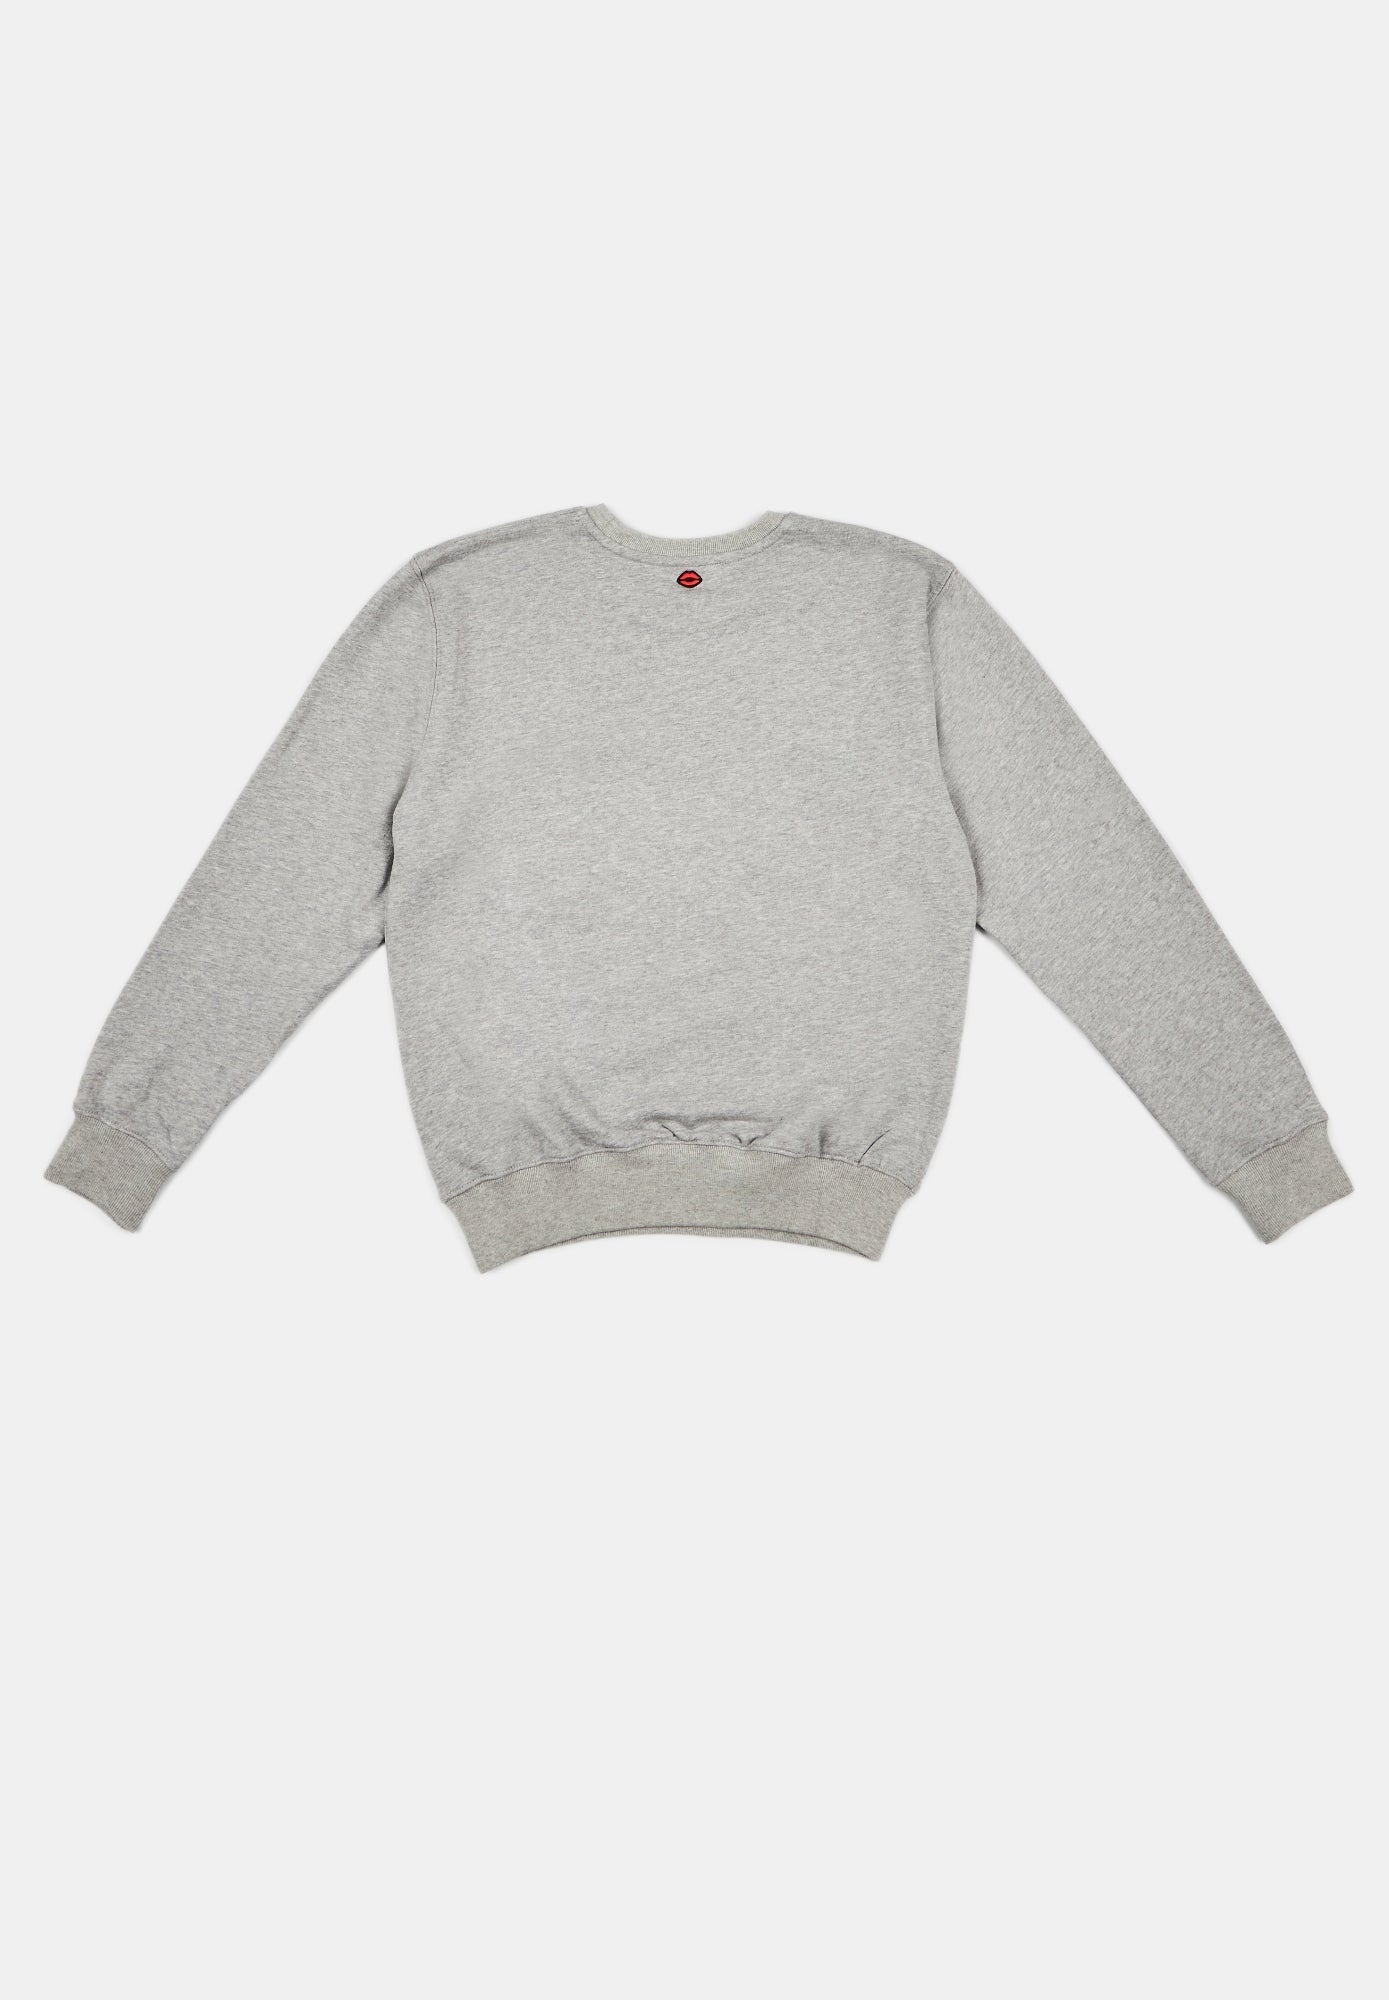 Babe Sweatshirt from Paname-Grey